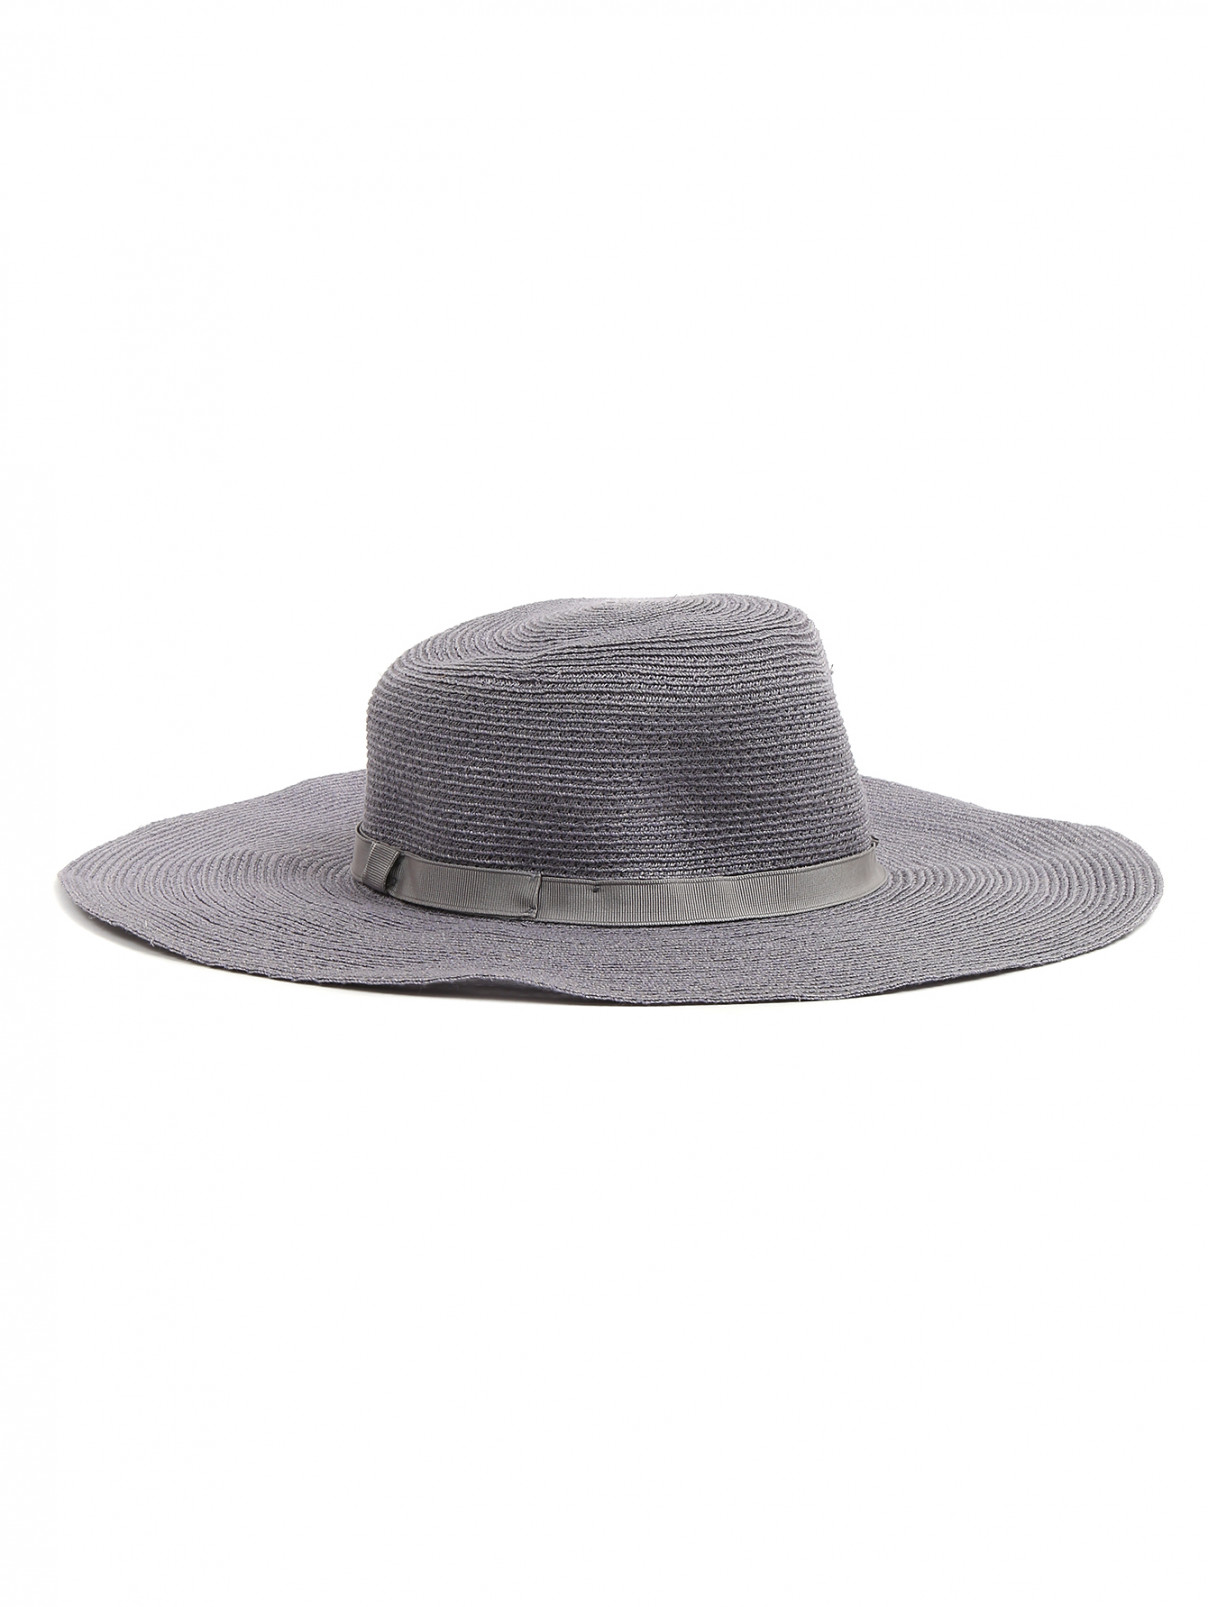 Шляпа с широкими полями Borsalino  –  Общий вид  – Цвет:  Серый